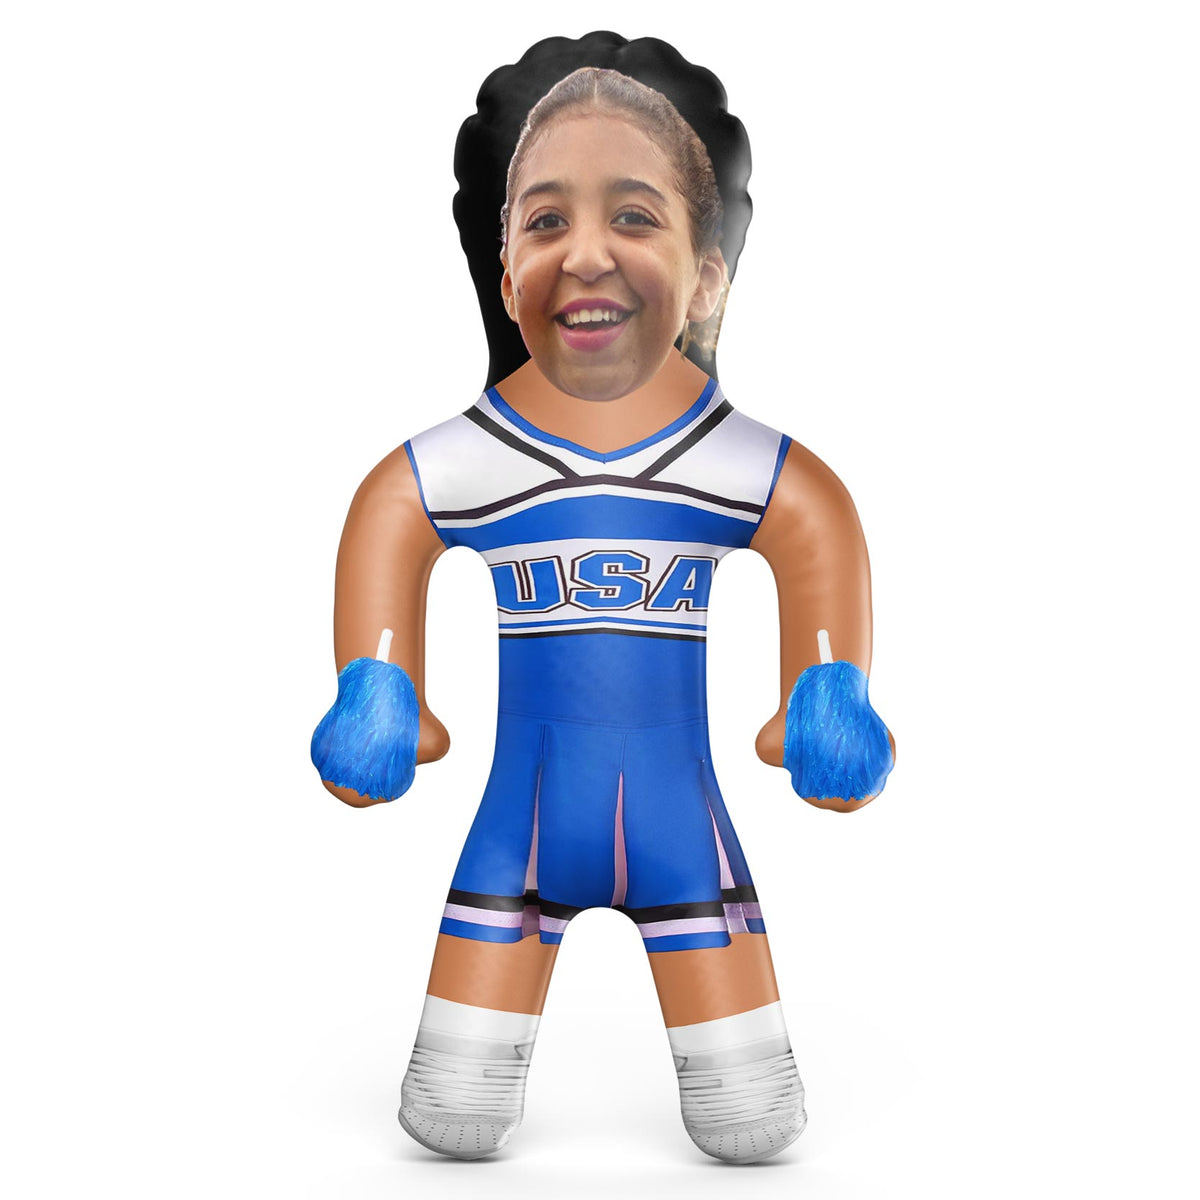 USA Cheerleader Blue